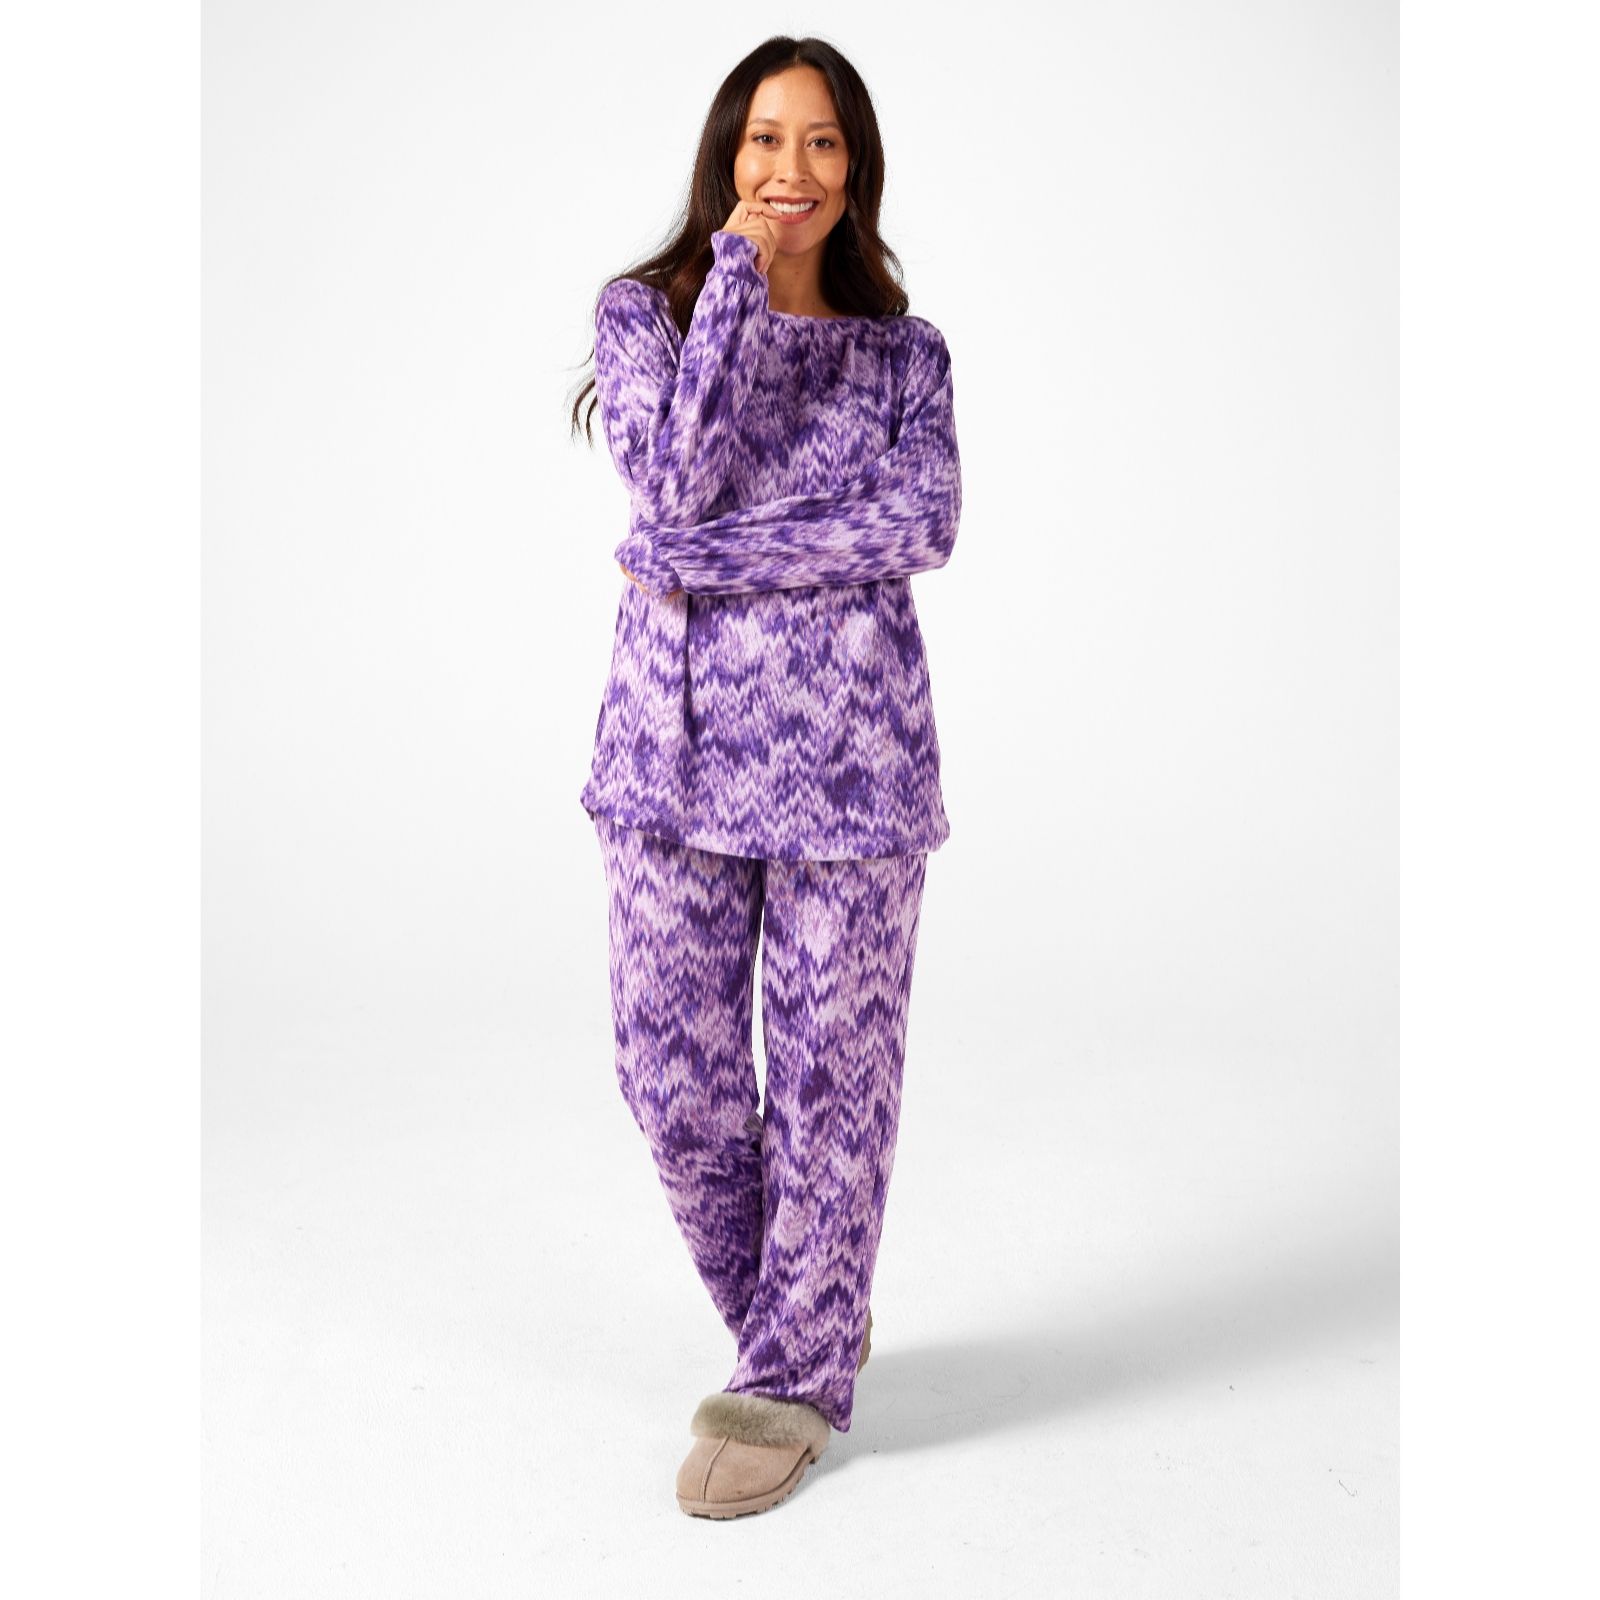 Ladies 4 Piece Pyjama Set from Carole Hochman - these are made